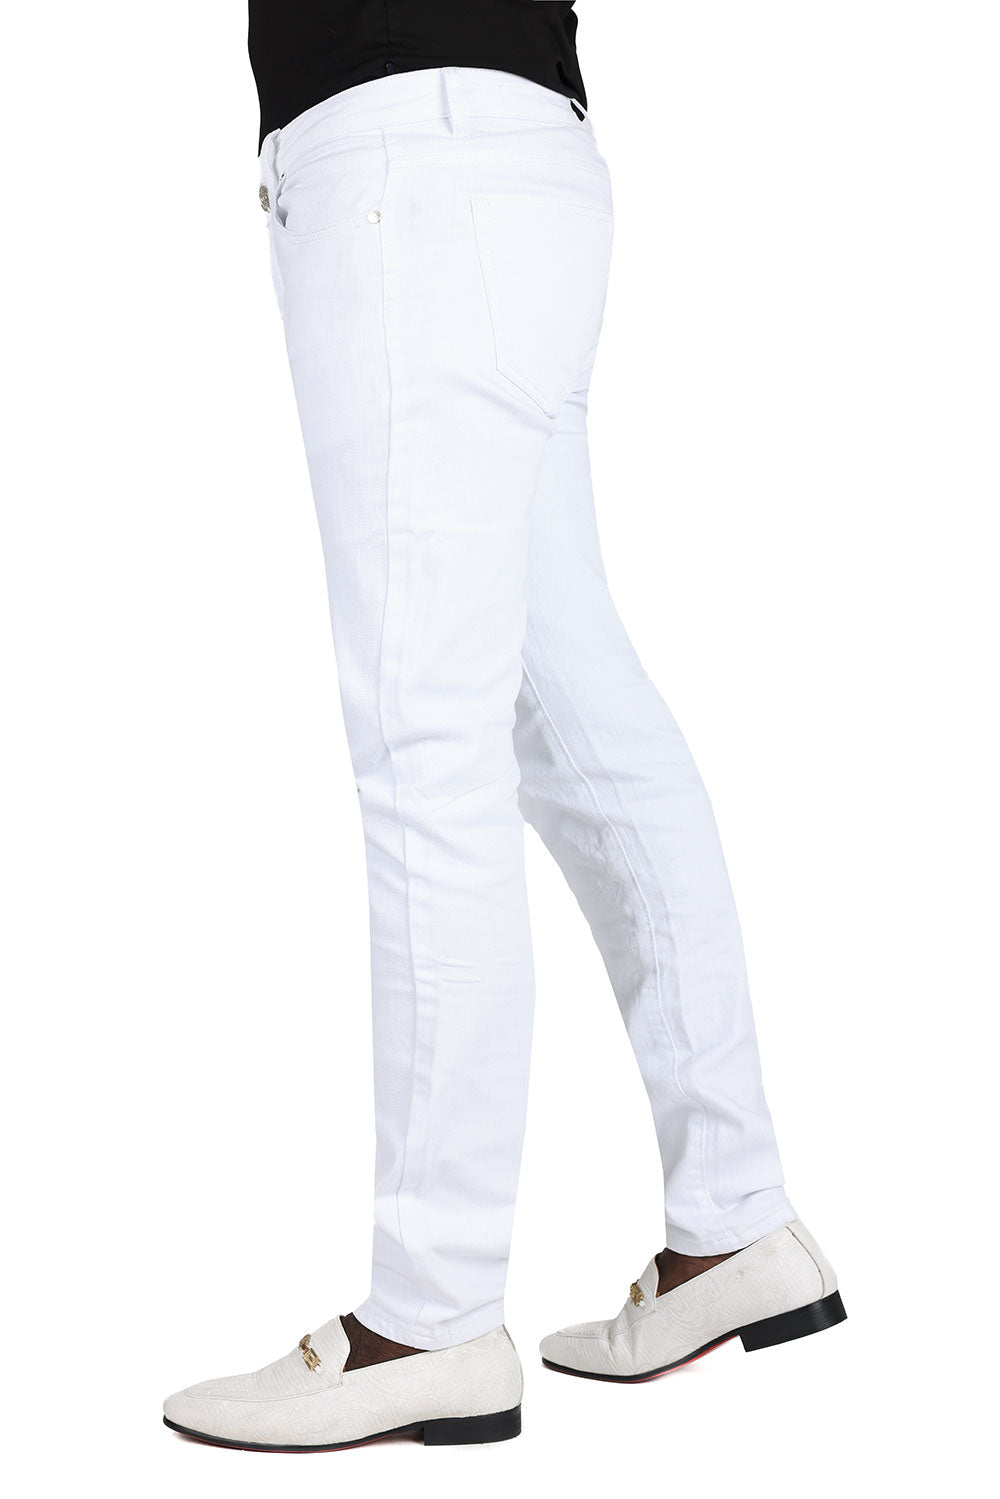 Barabas Men's Solid Color  Premium Contemporary Denim Jeans 2JE40 White